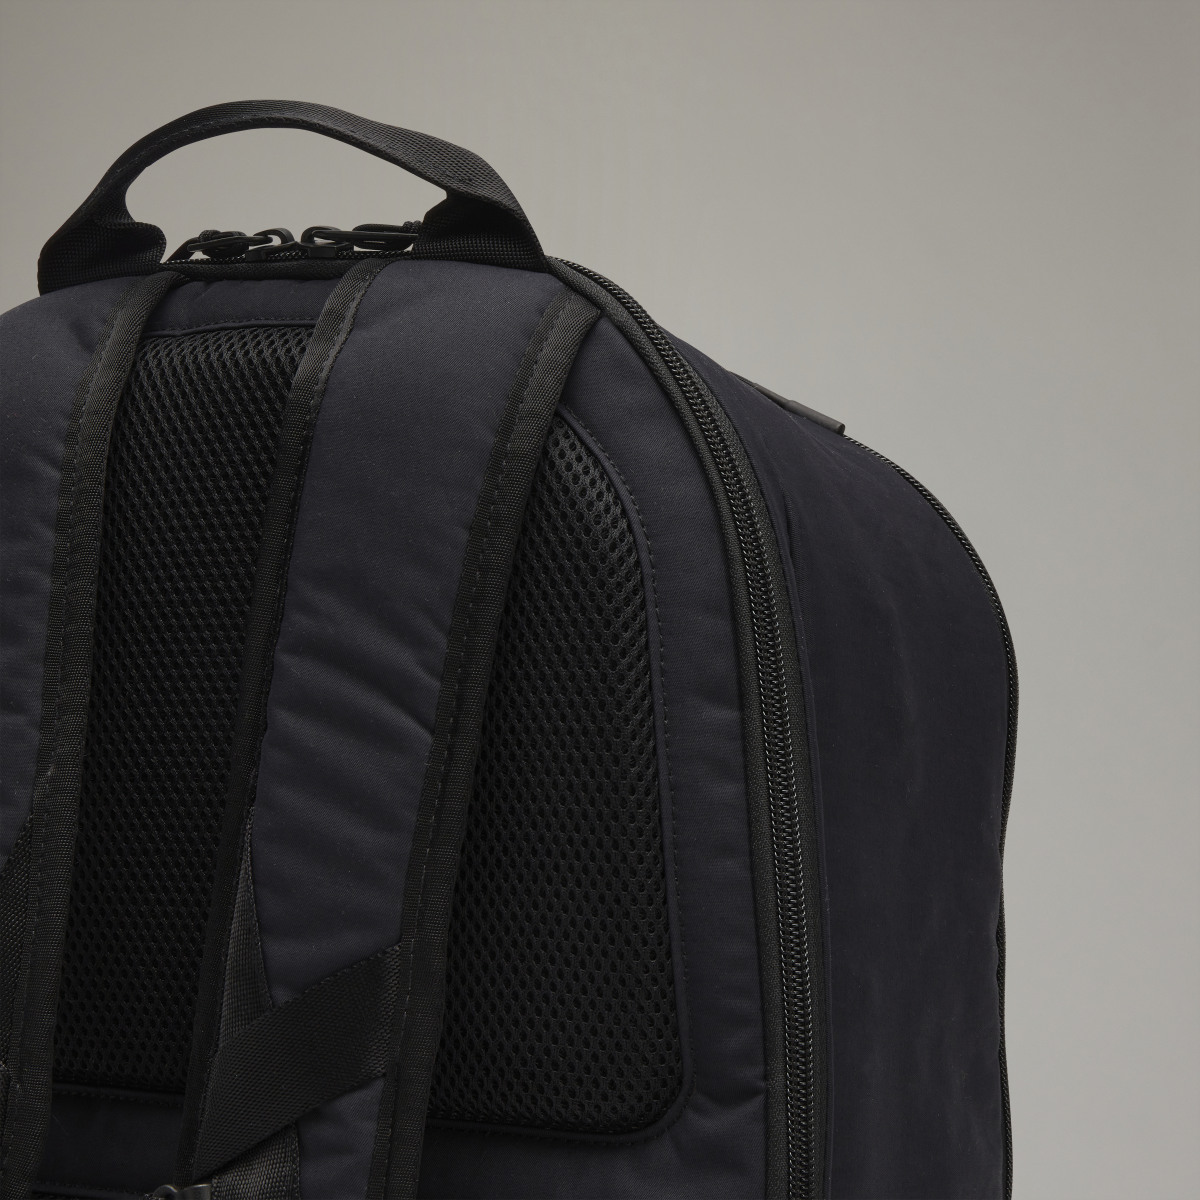 Adidas Y-3 Tech Backpack. 5